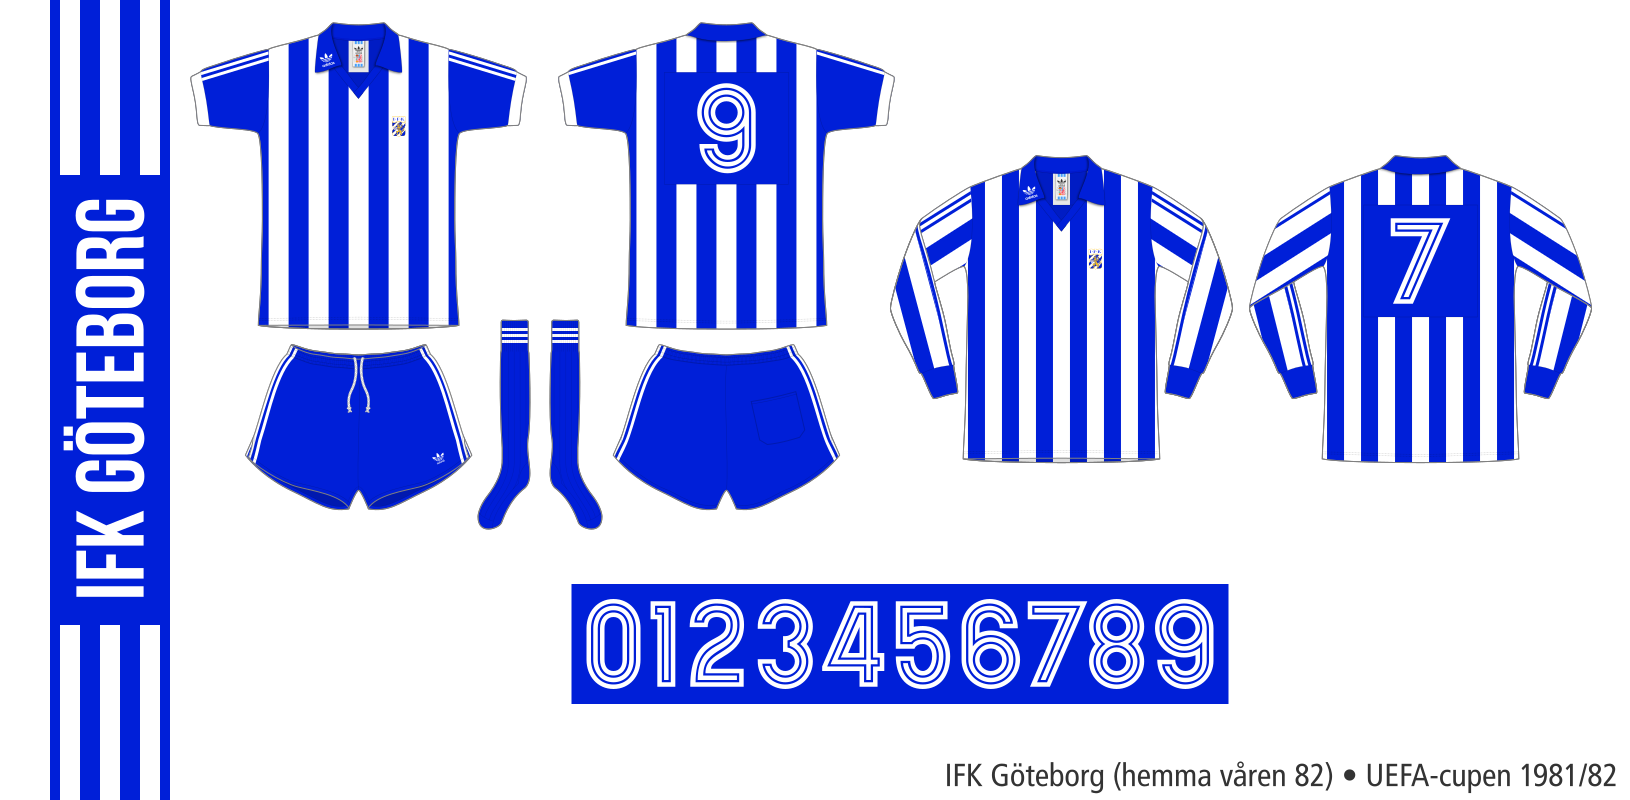 IFK Göteborg 1982 (UEFA-cupen)